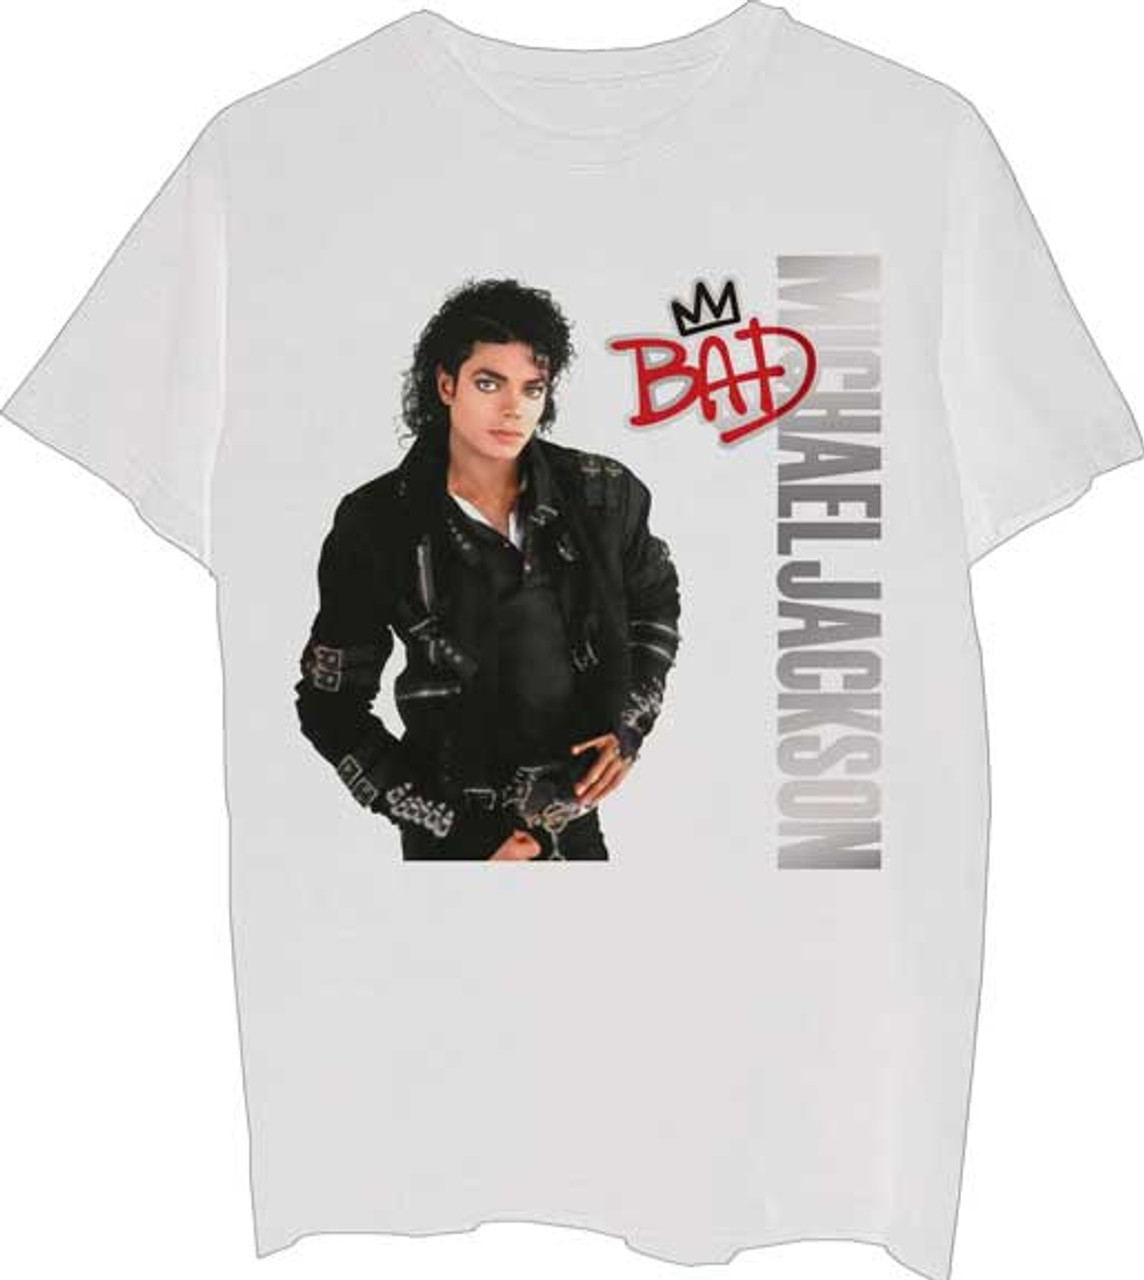 Michael Jackson Printed T Shirt, Kids, Boys/Girls | Global MJ Shop